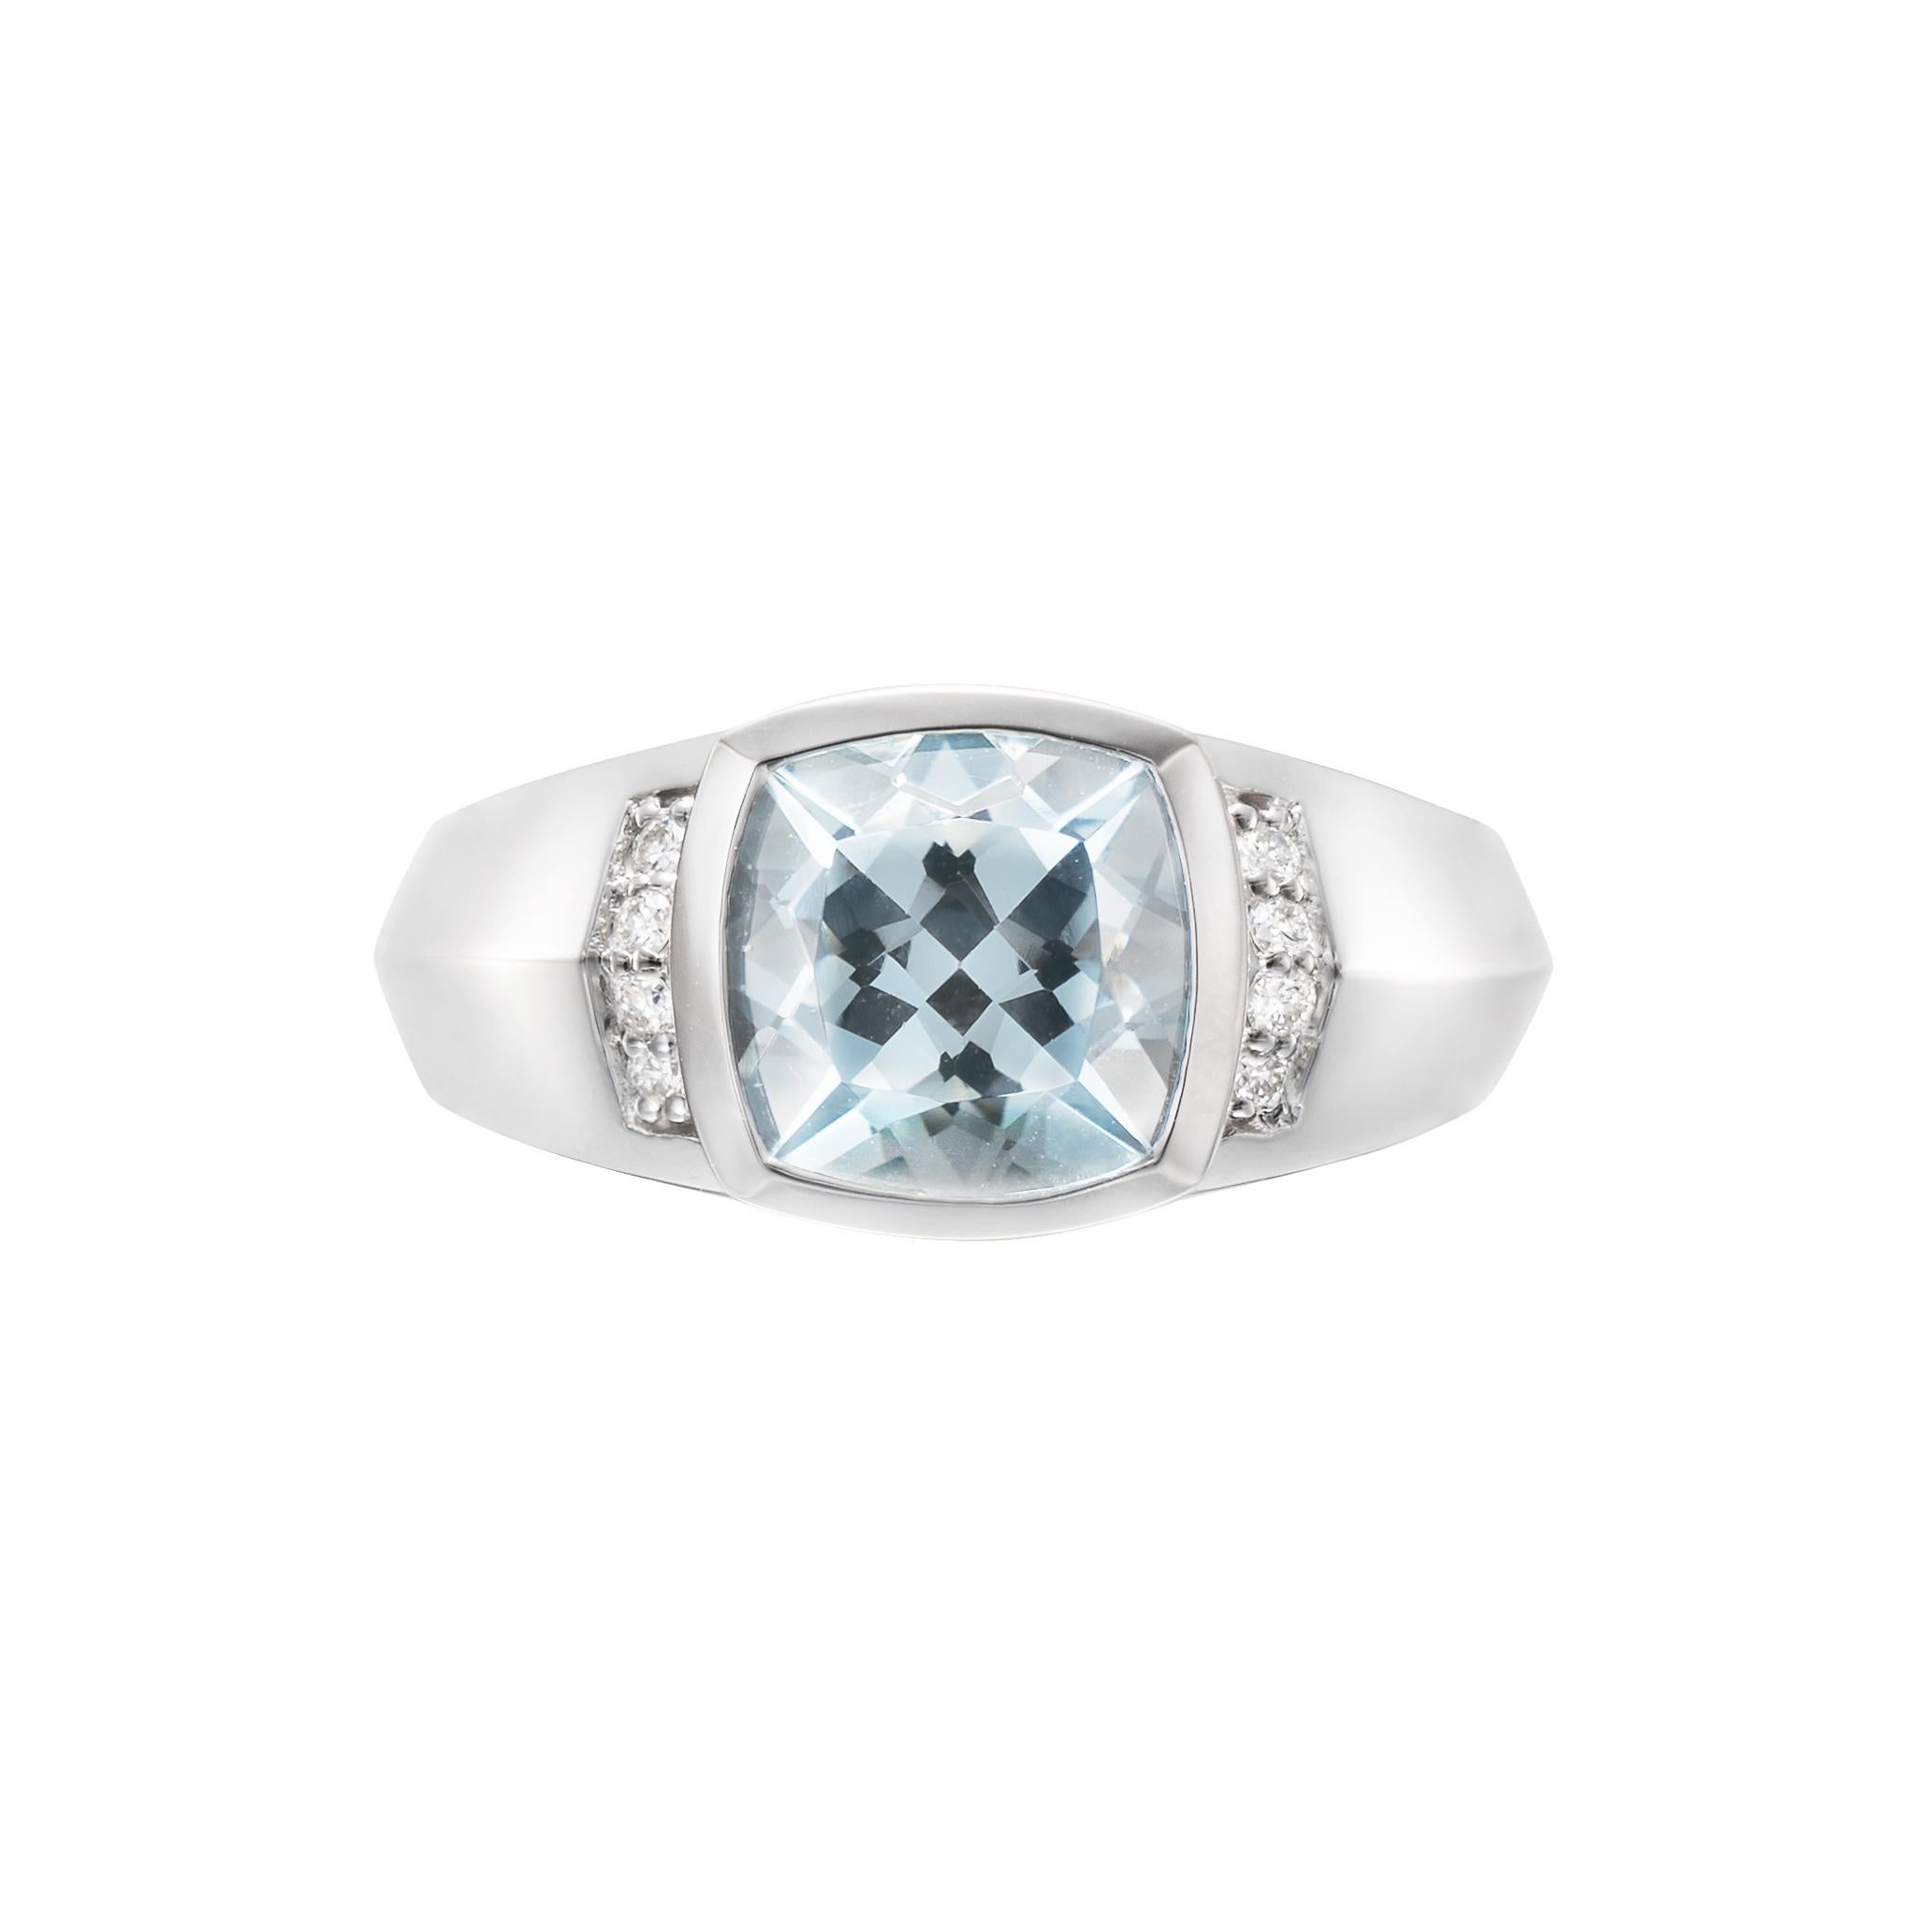 Cushion Cut Aquamarine and White Diamond Ring in 18 Karat White Gold. For Sale